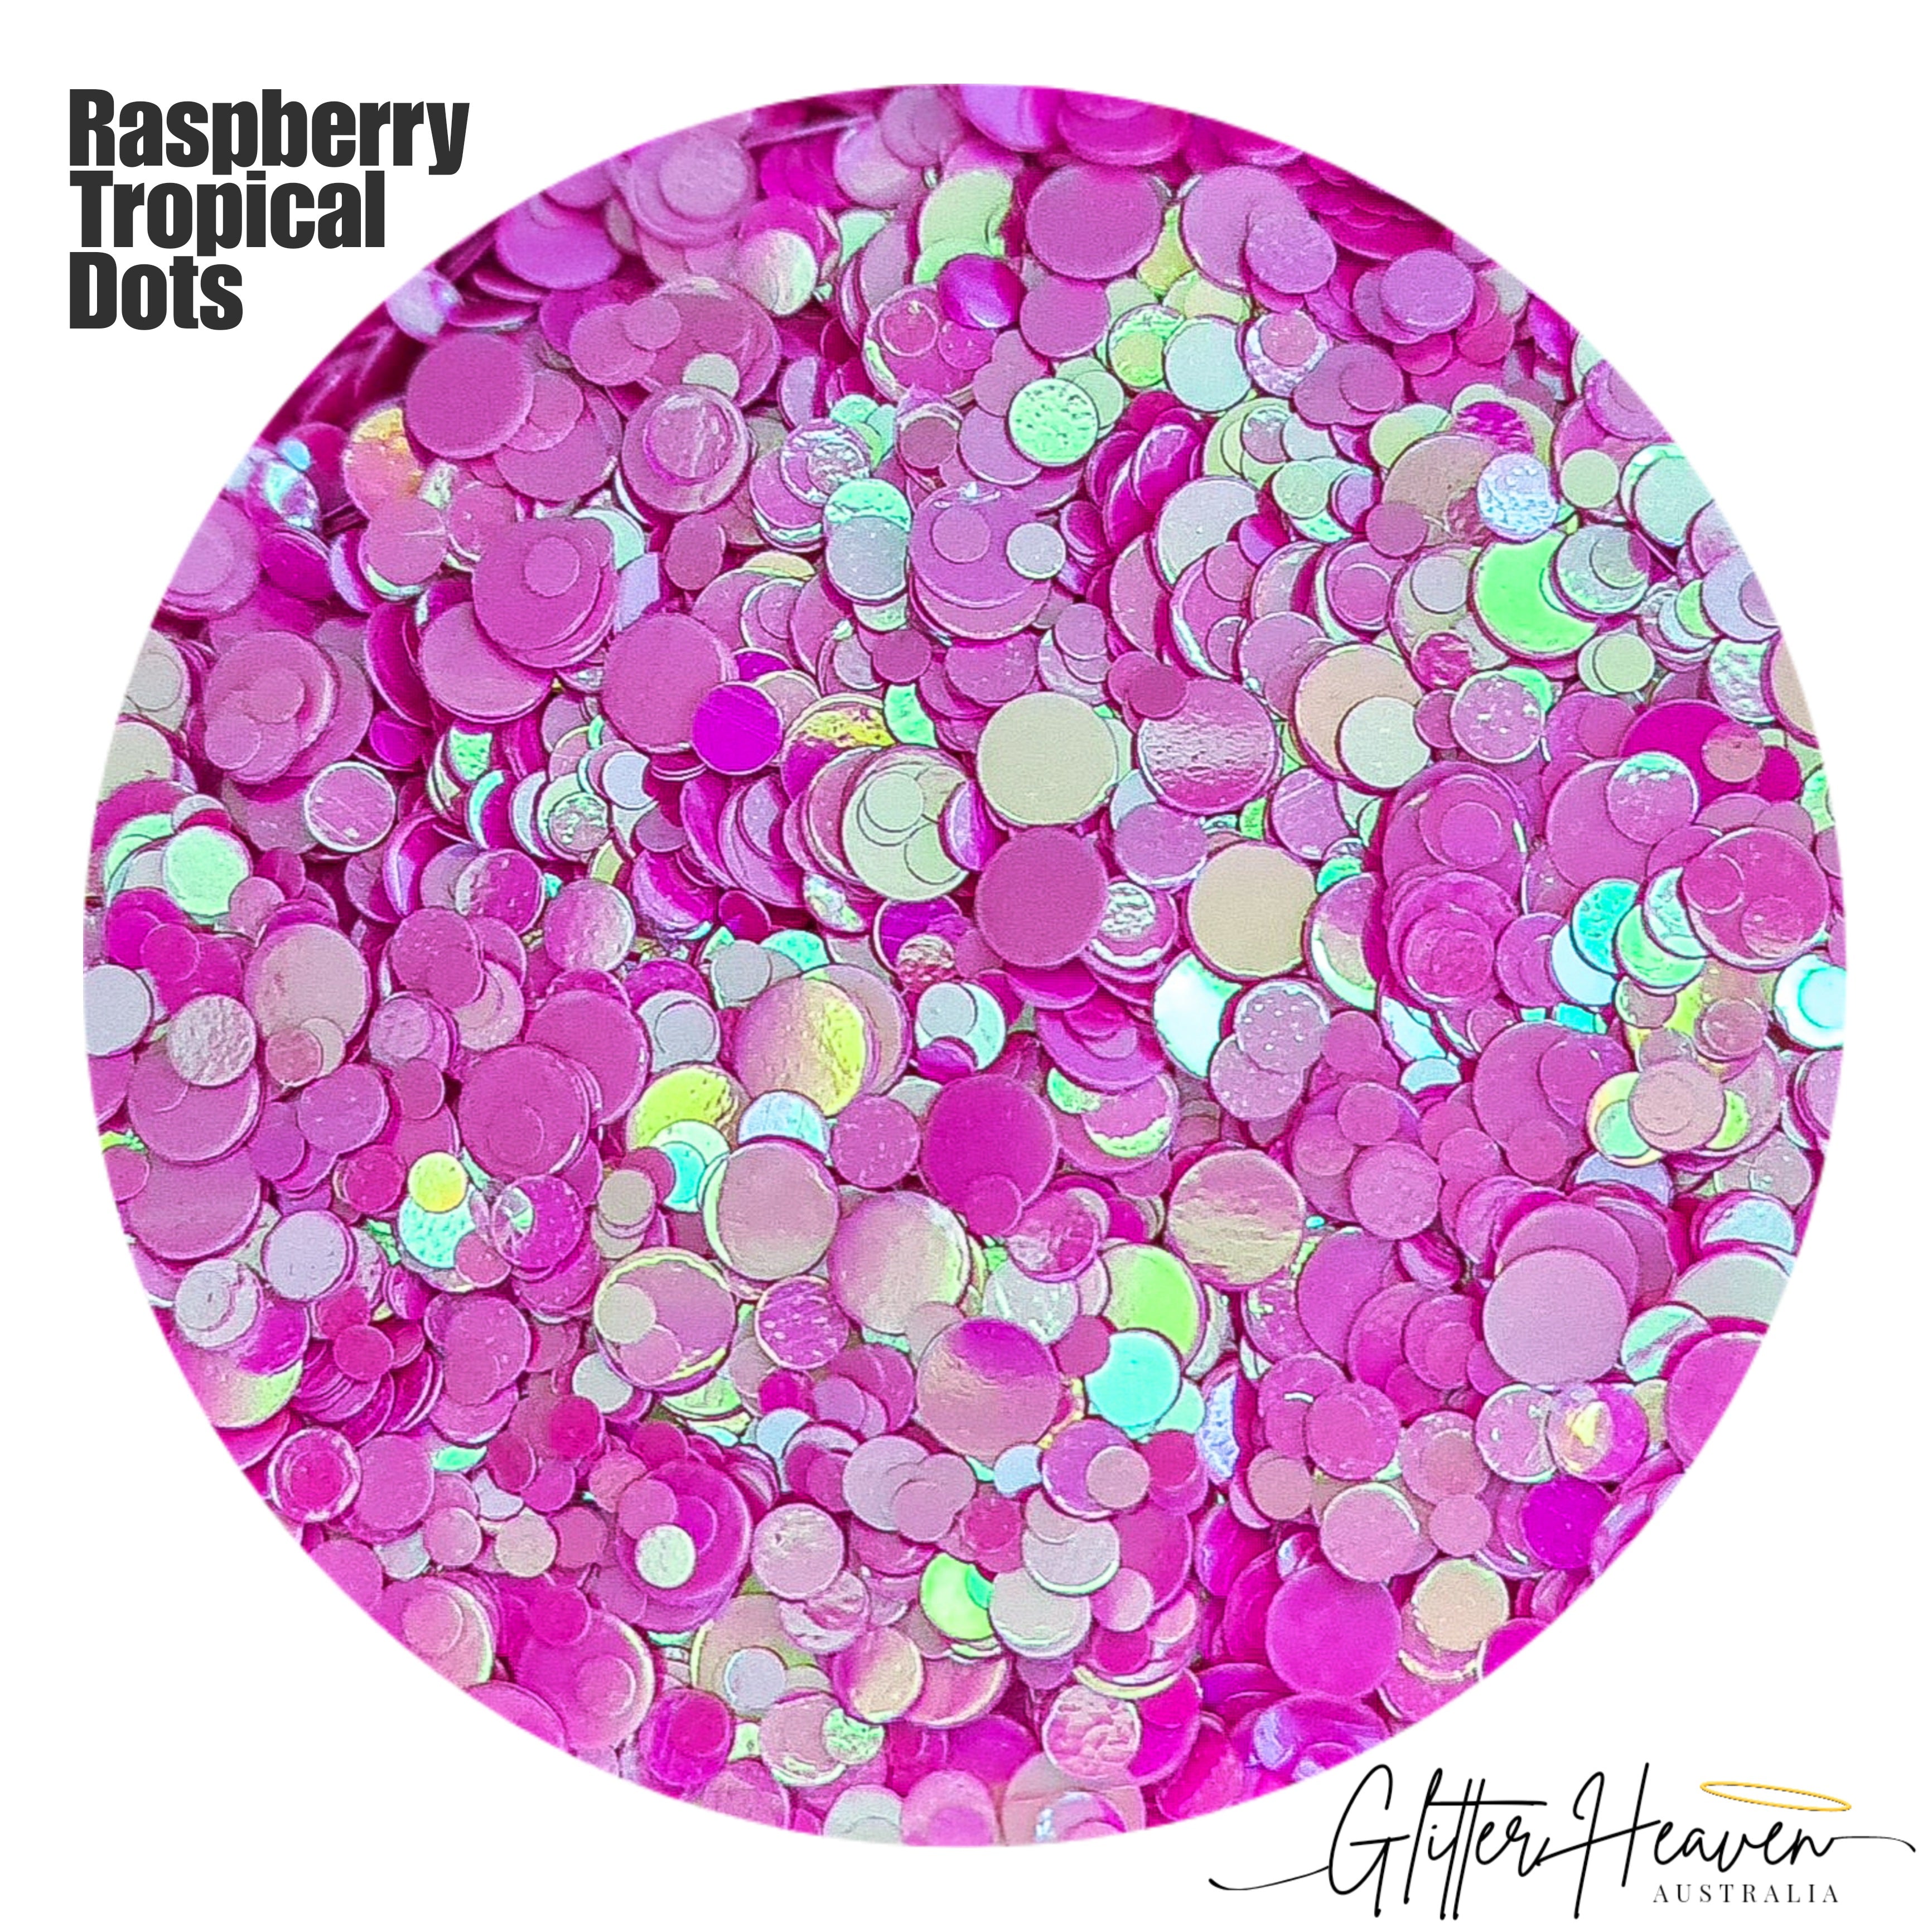 Raspberry Sorbet Tropical Dots